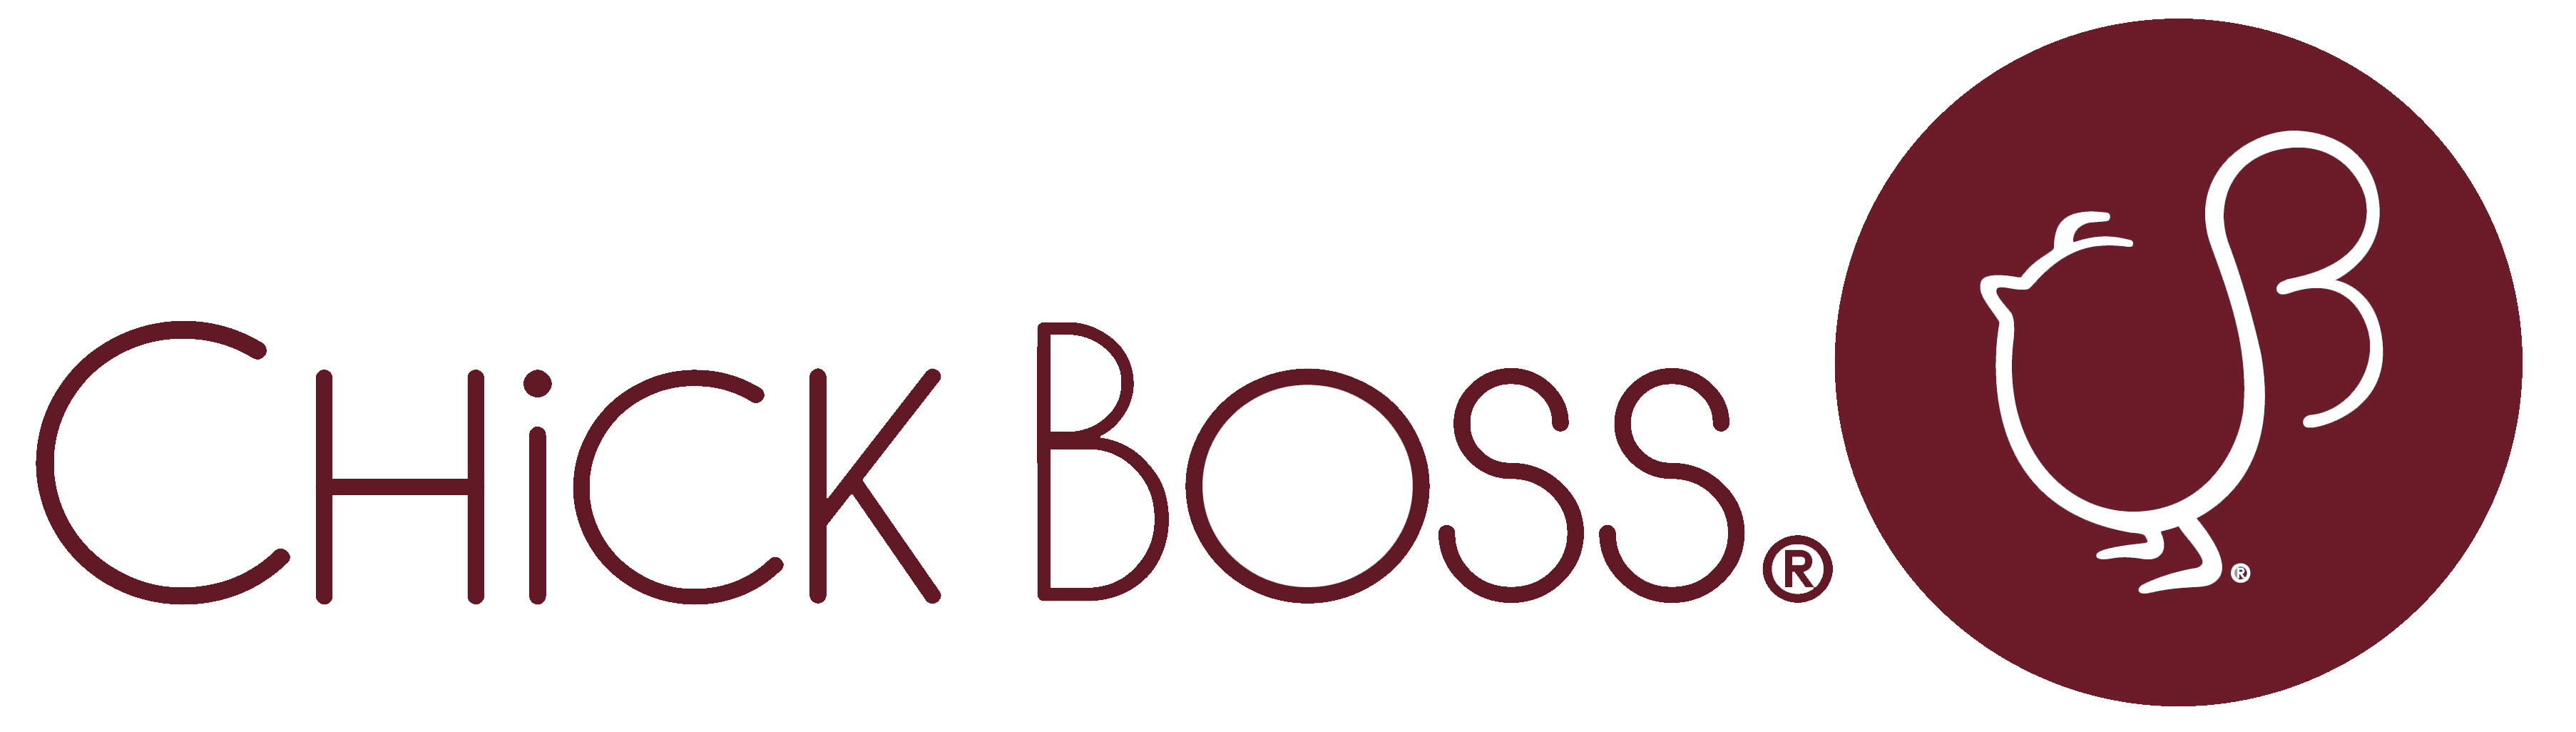 Chick Boss, LLC logo